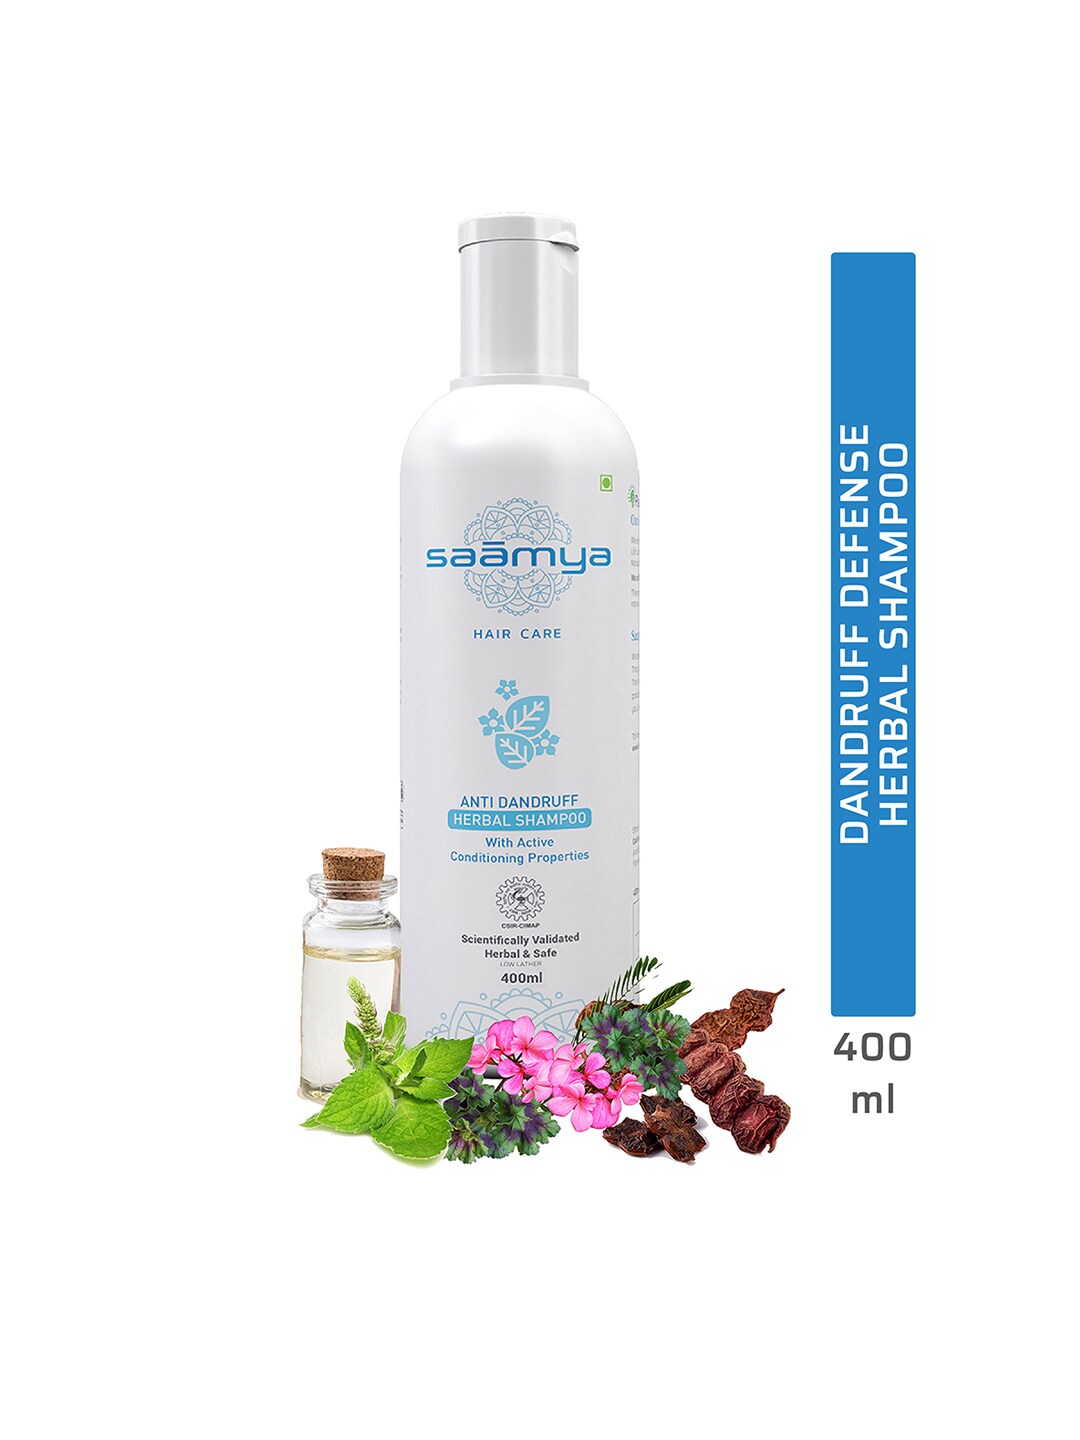 Saamya Anti-Dandruff Herbal Sustainable Shampoo 400 ml Price in India